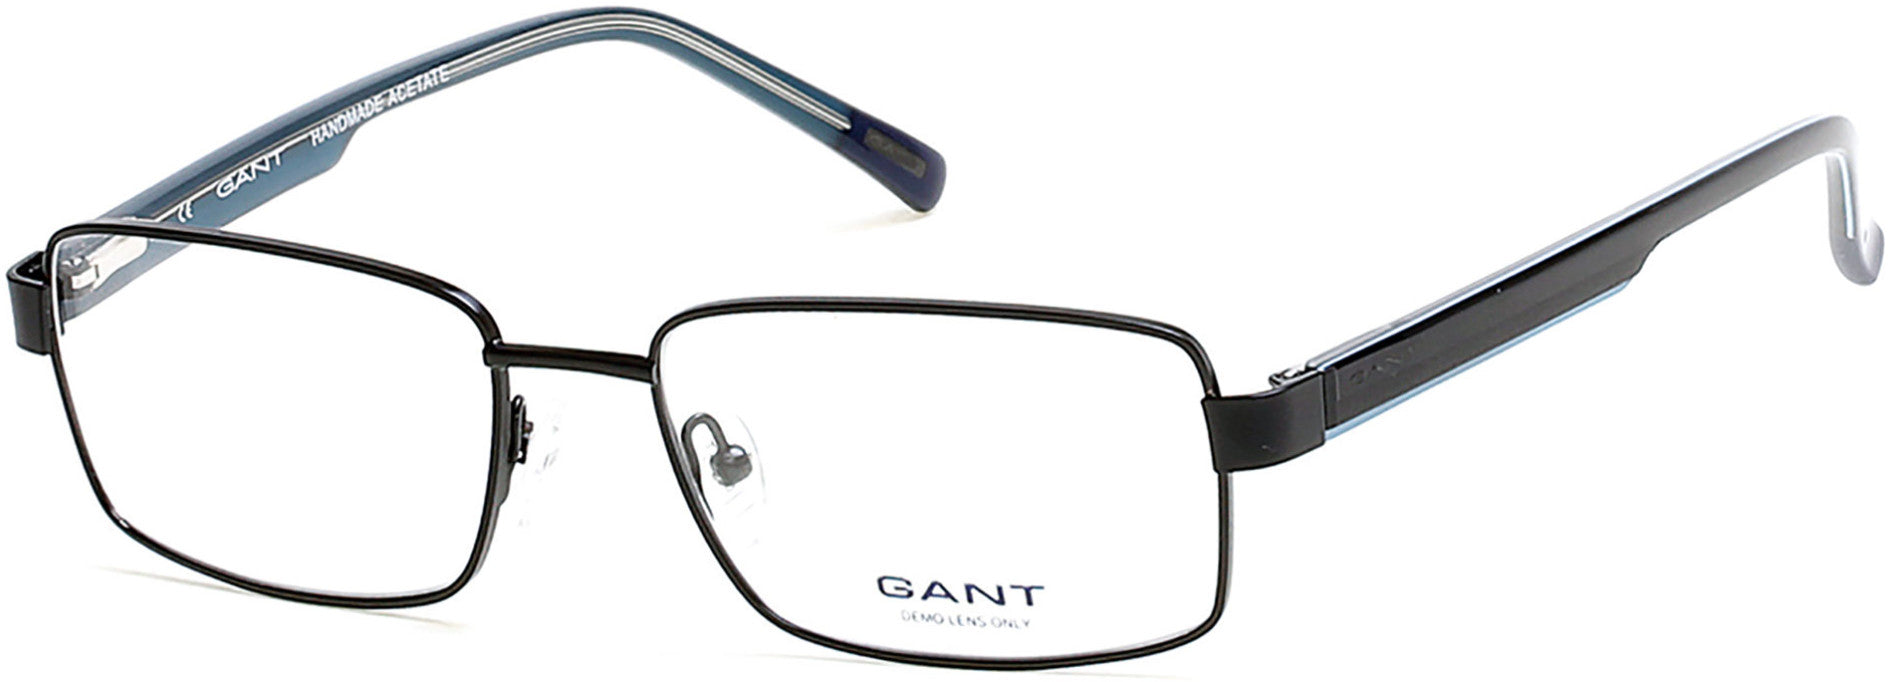 Gant GA3102 Rectangular Eyeglasses 002-002 - Matte Black